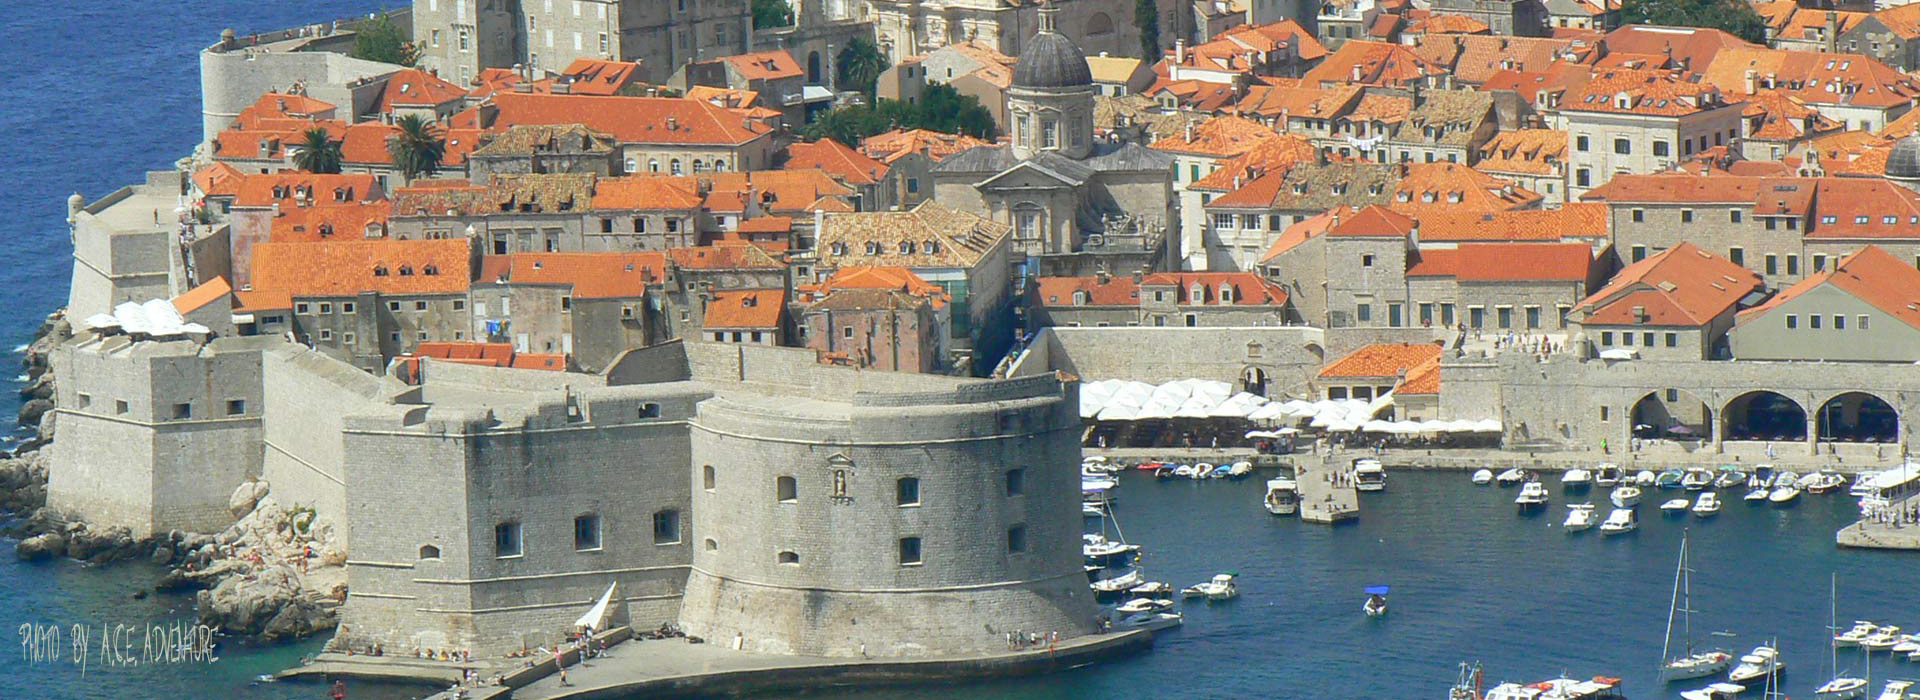 Montenegro walking self-guided holiday - Dubrovnik